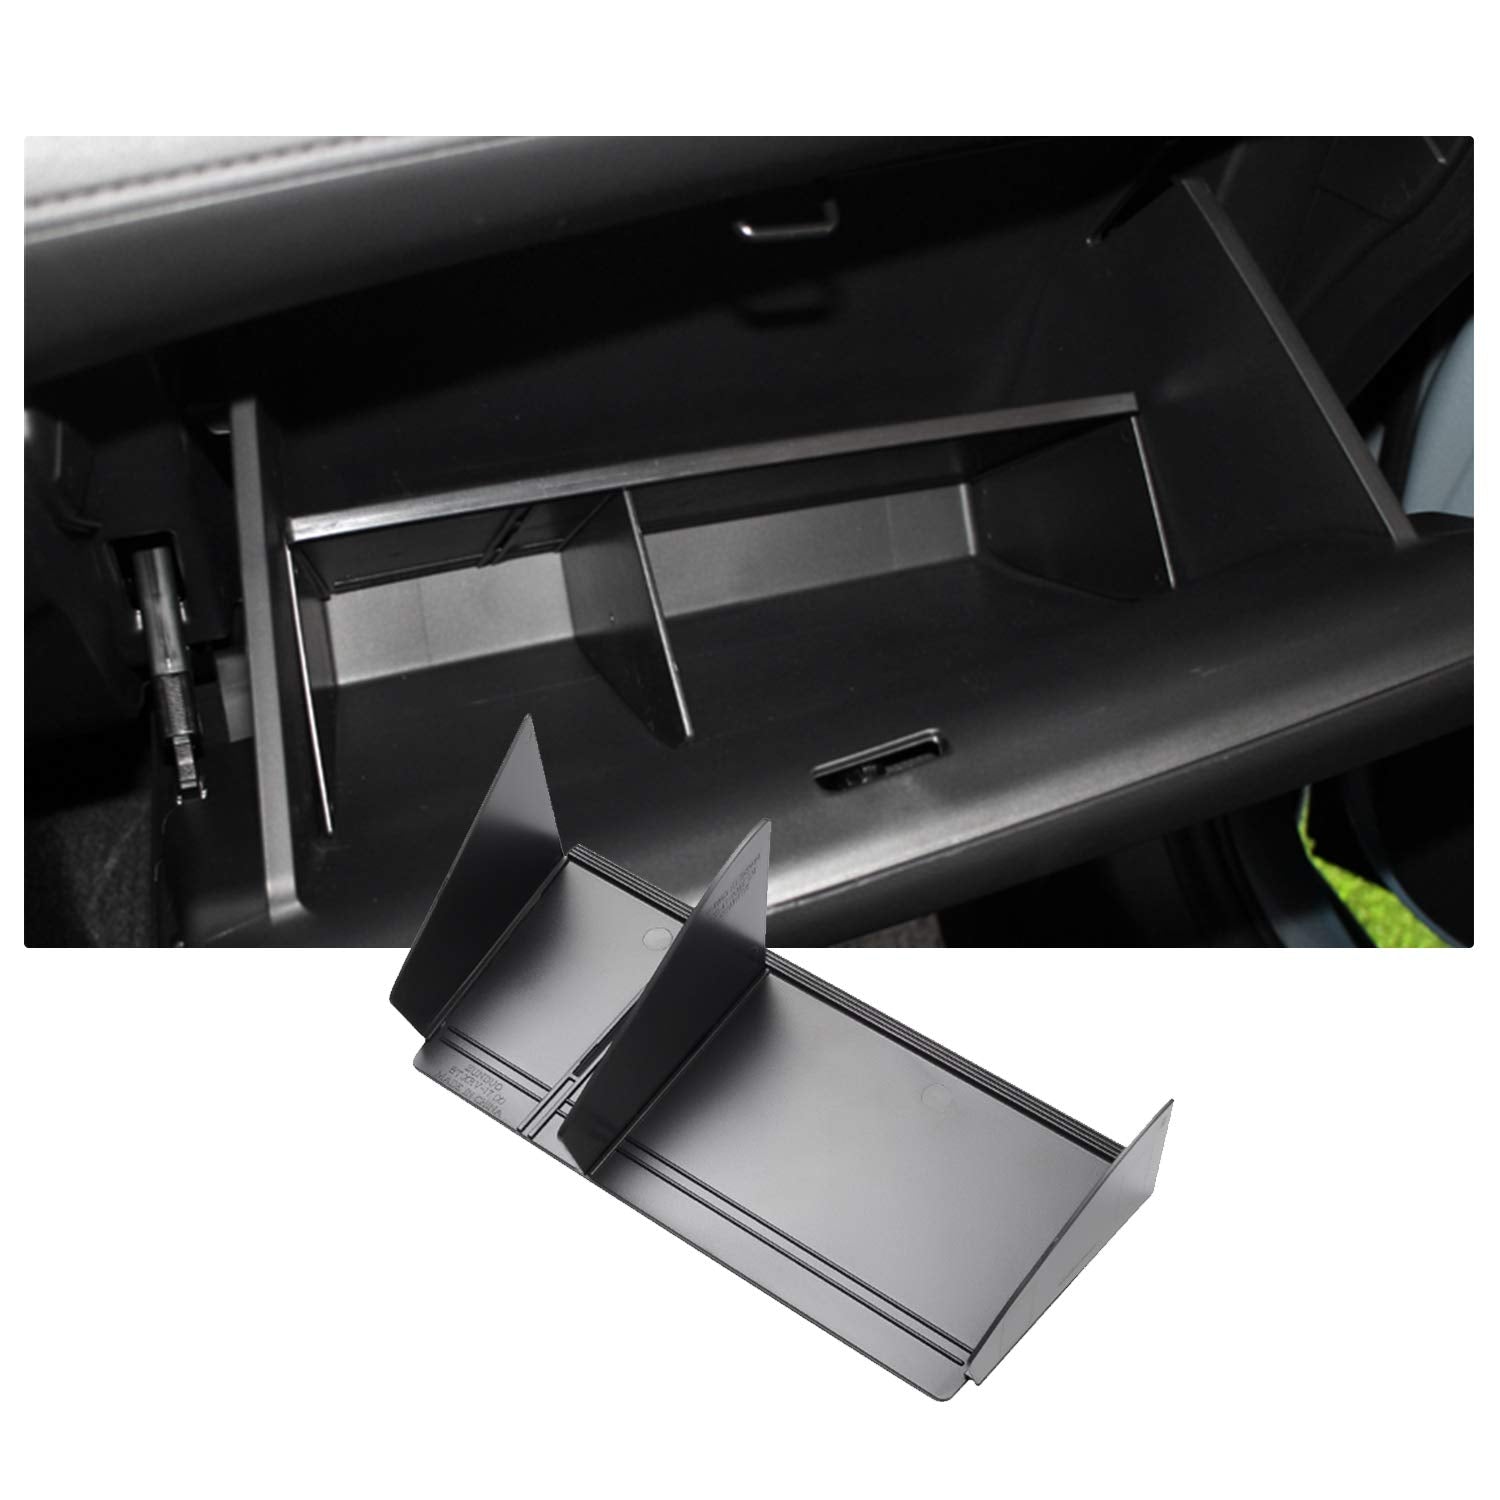 Honda HR-V Glove Box Organizer Shelves 2016+ - LFOTPP Car Accessories